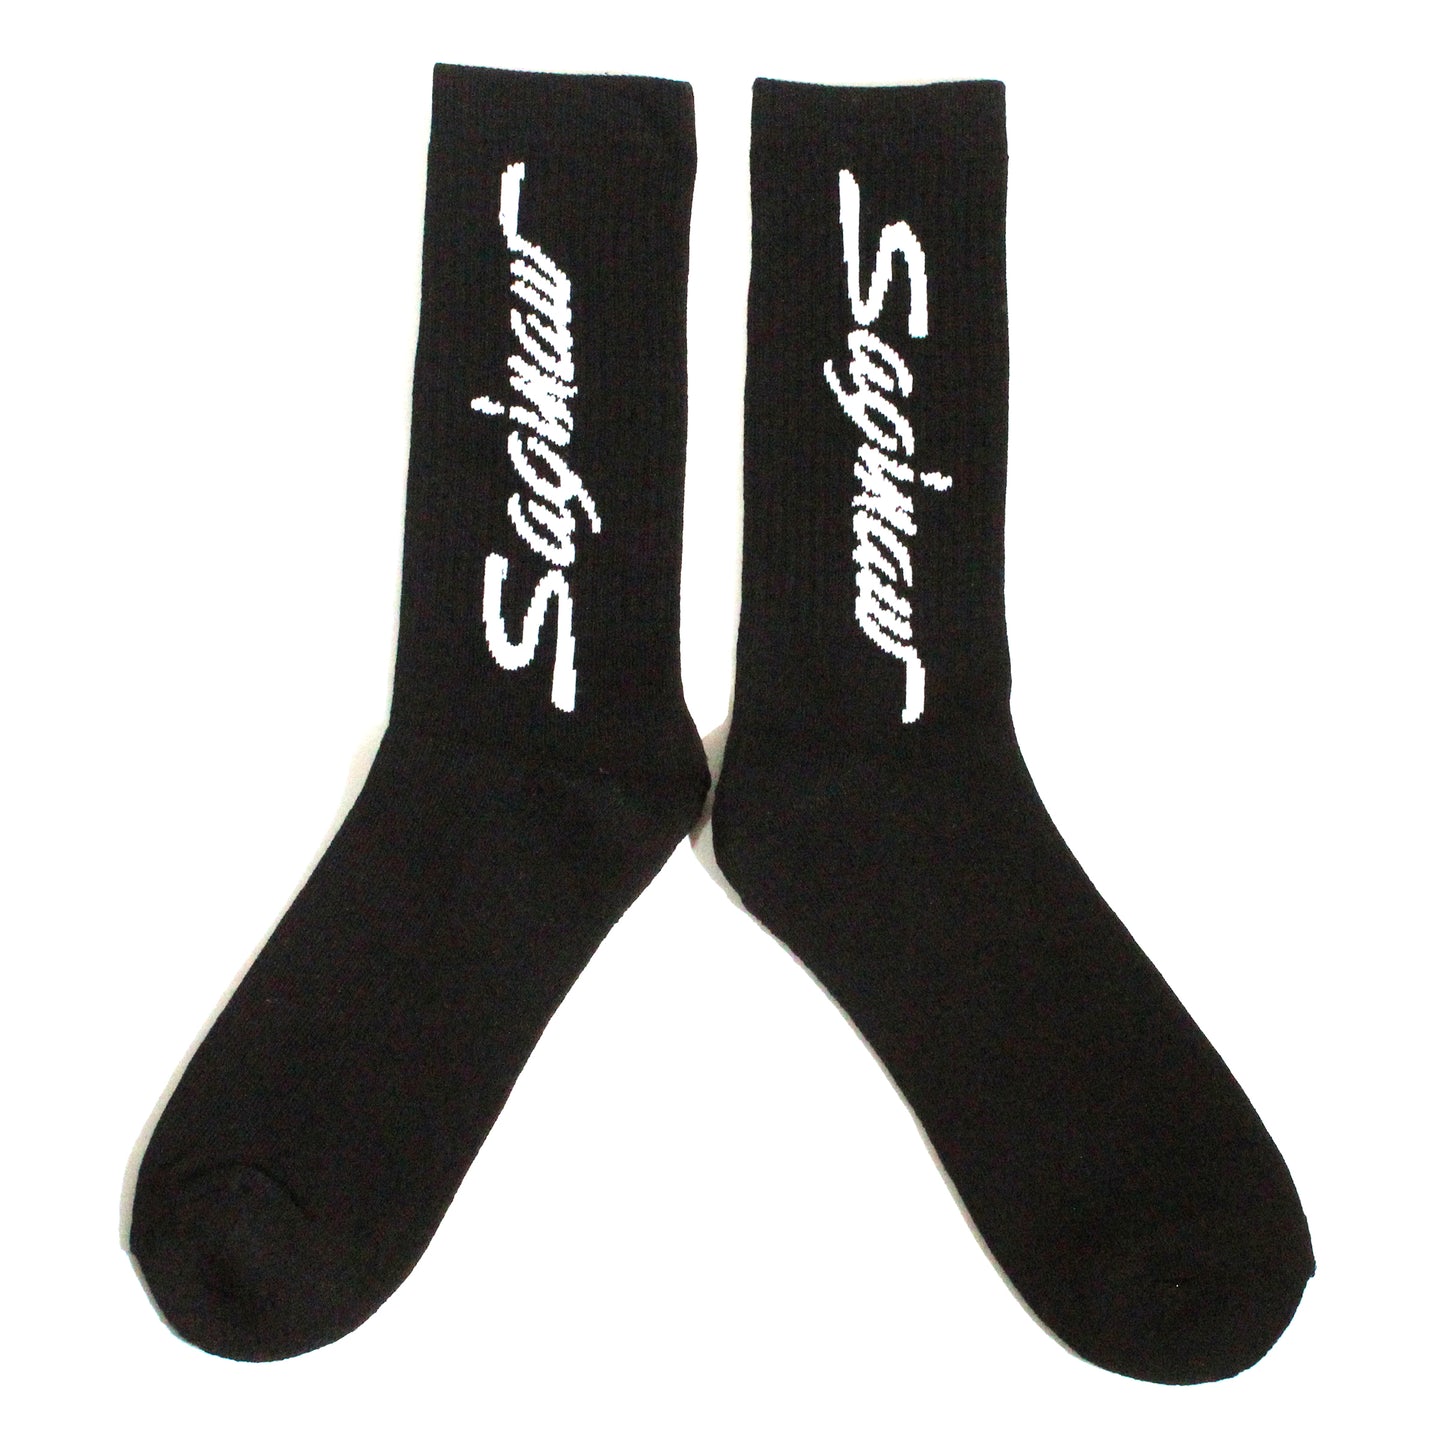 Saginaw Socks - Black